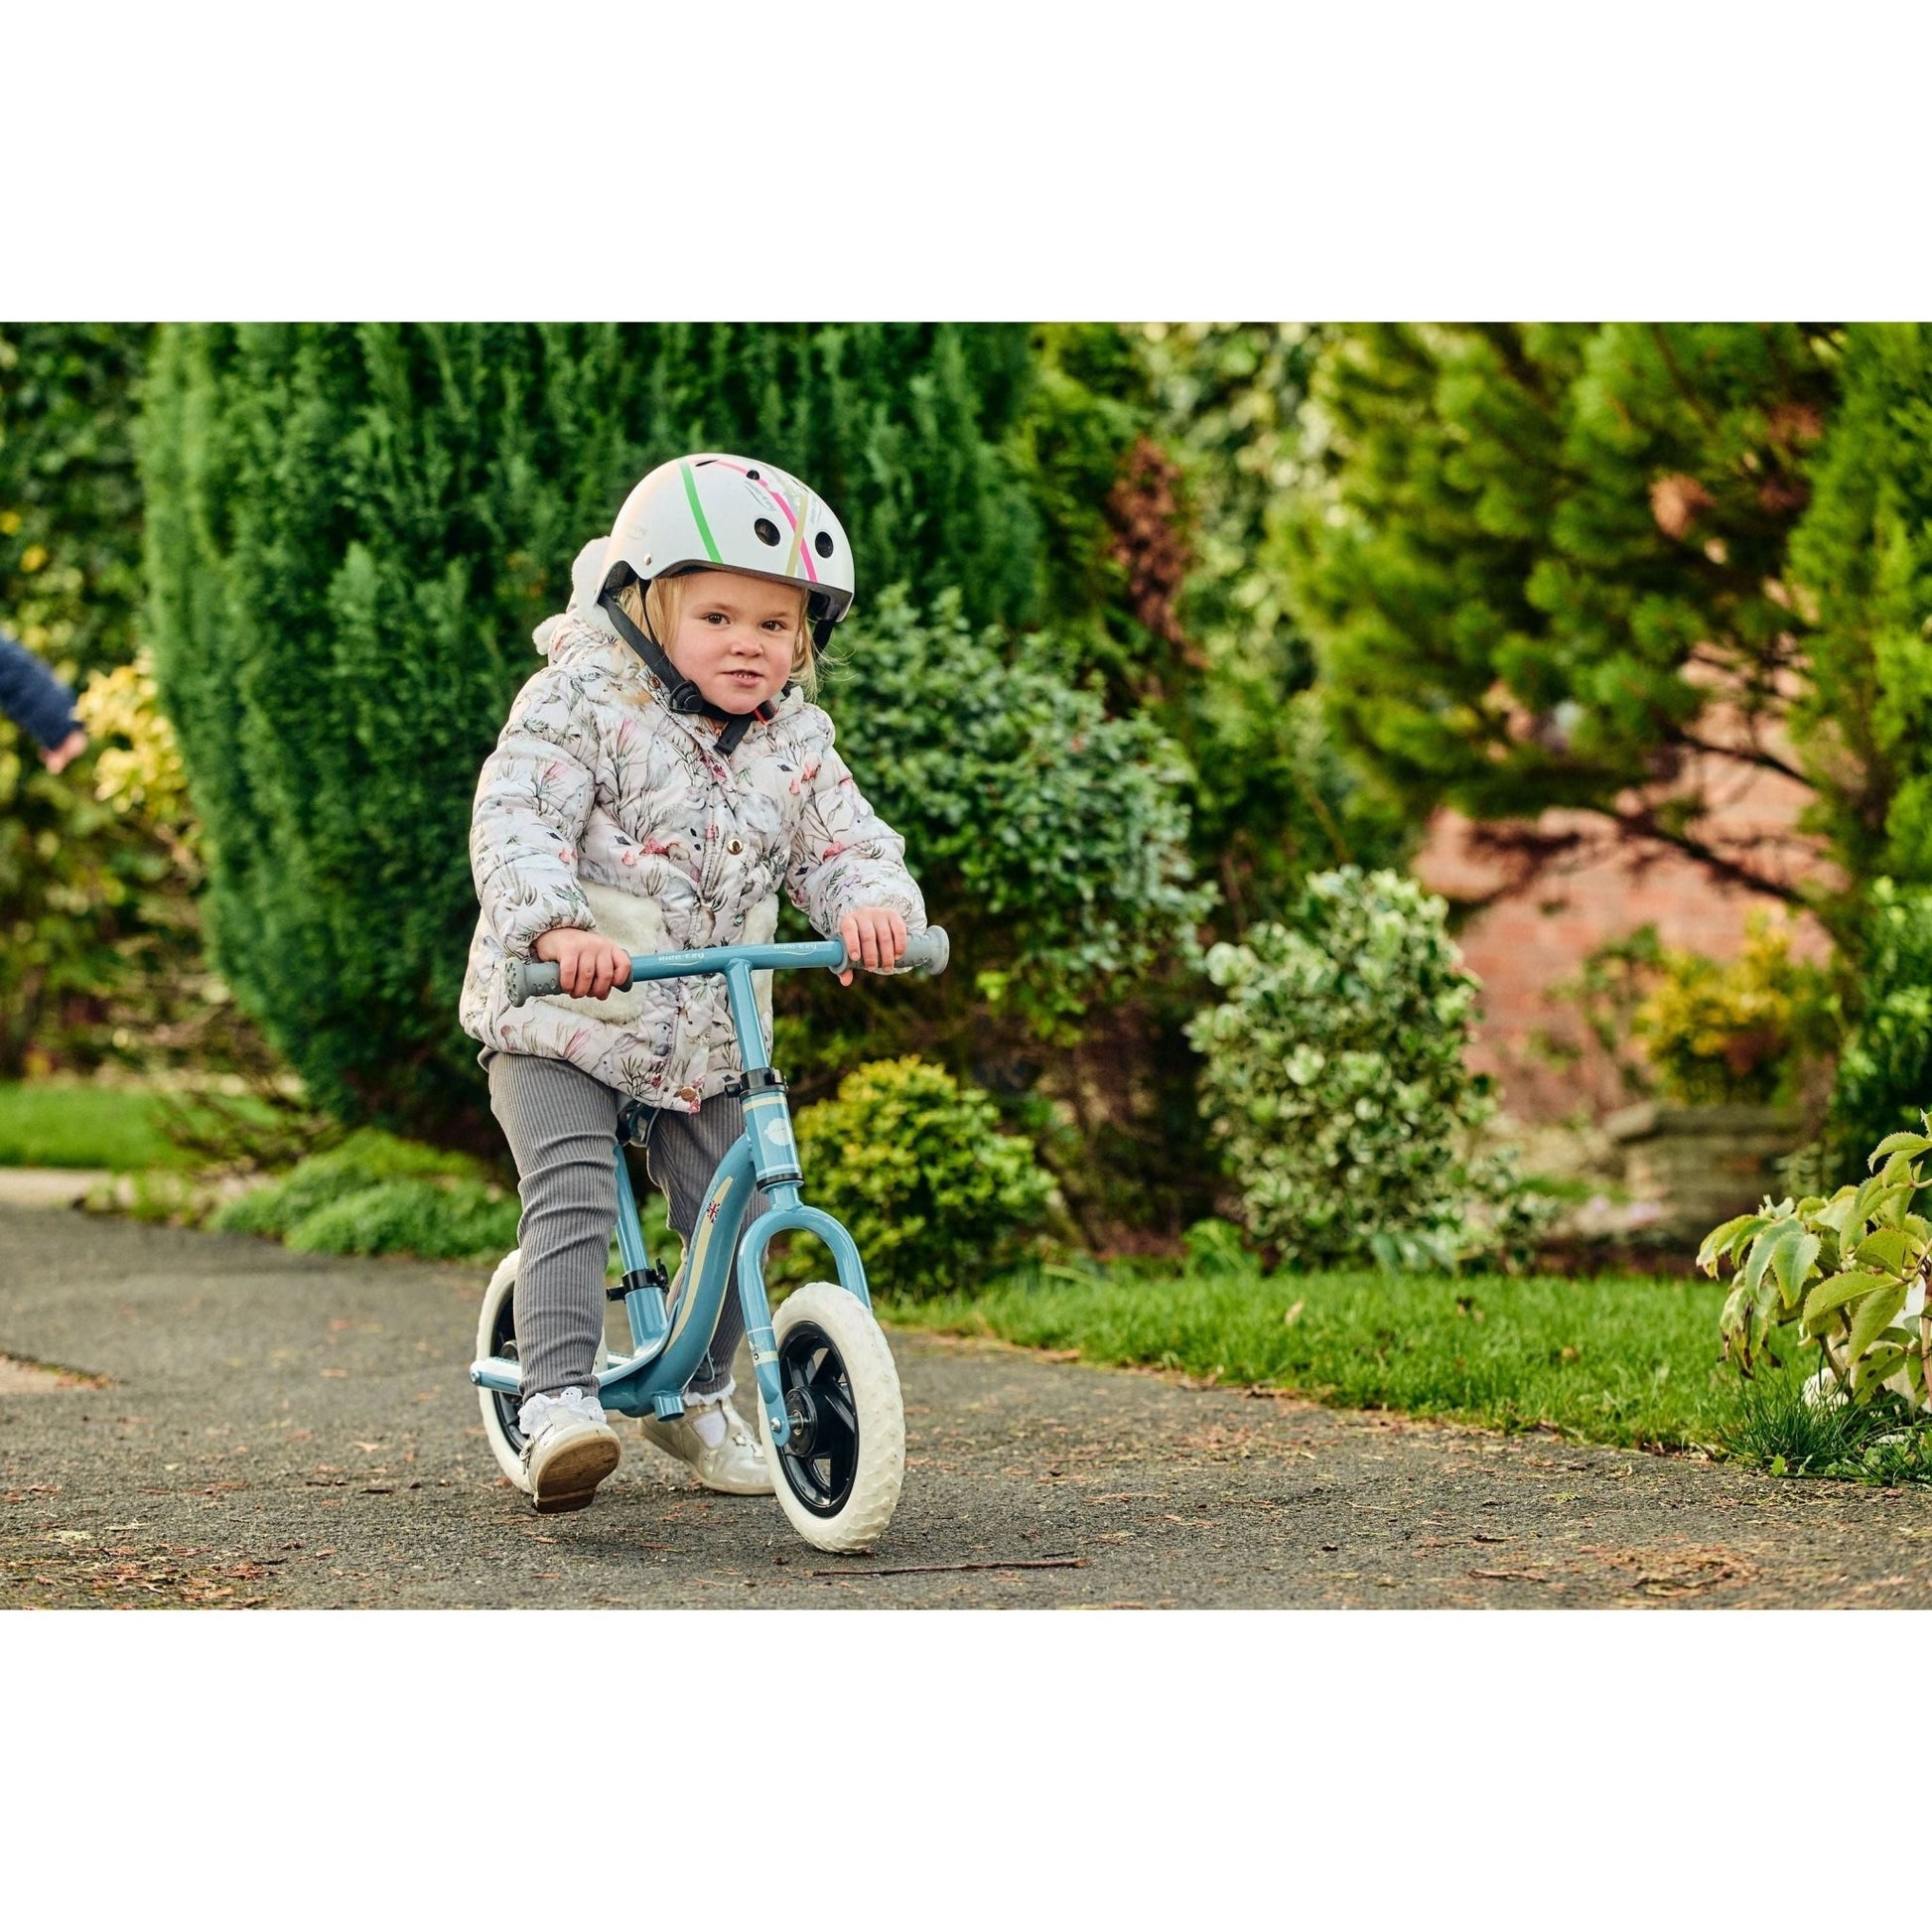 girl riding Ride-Ezy Go Balance Bike - Blue & Silver on pavement